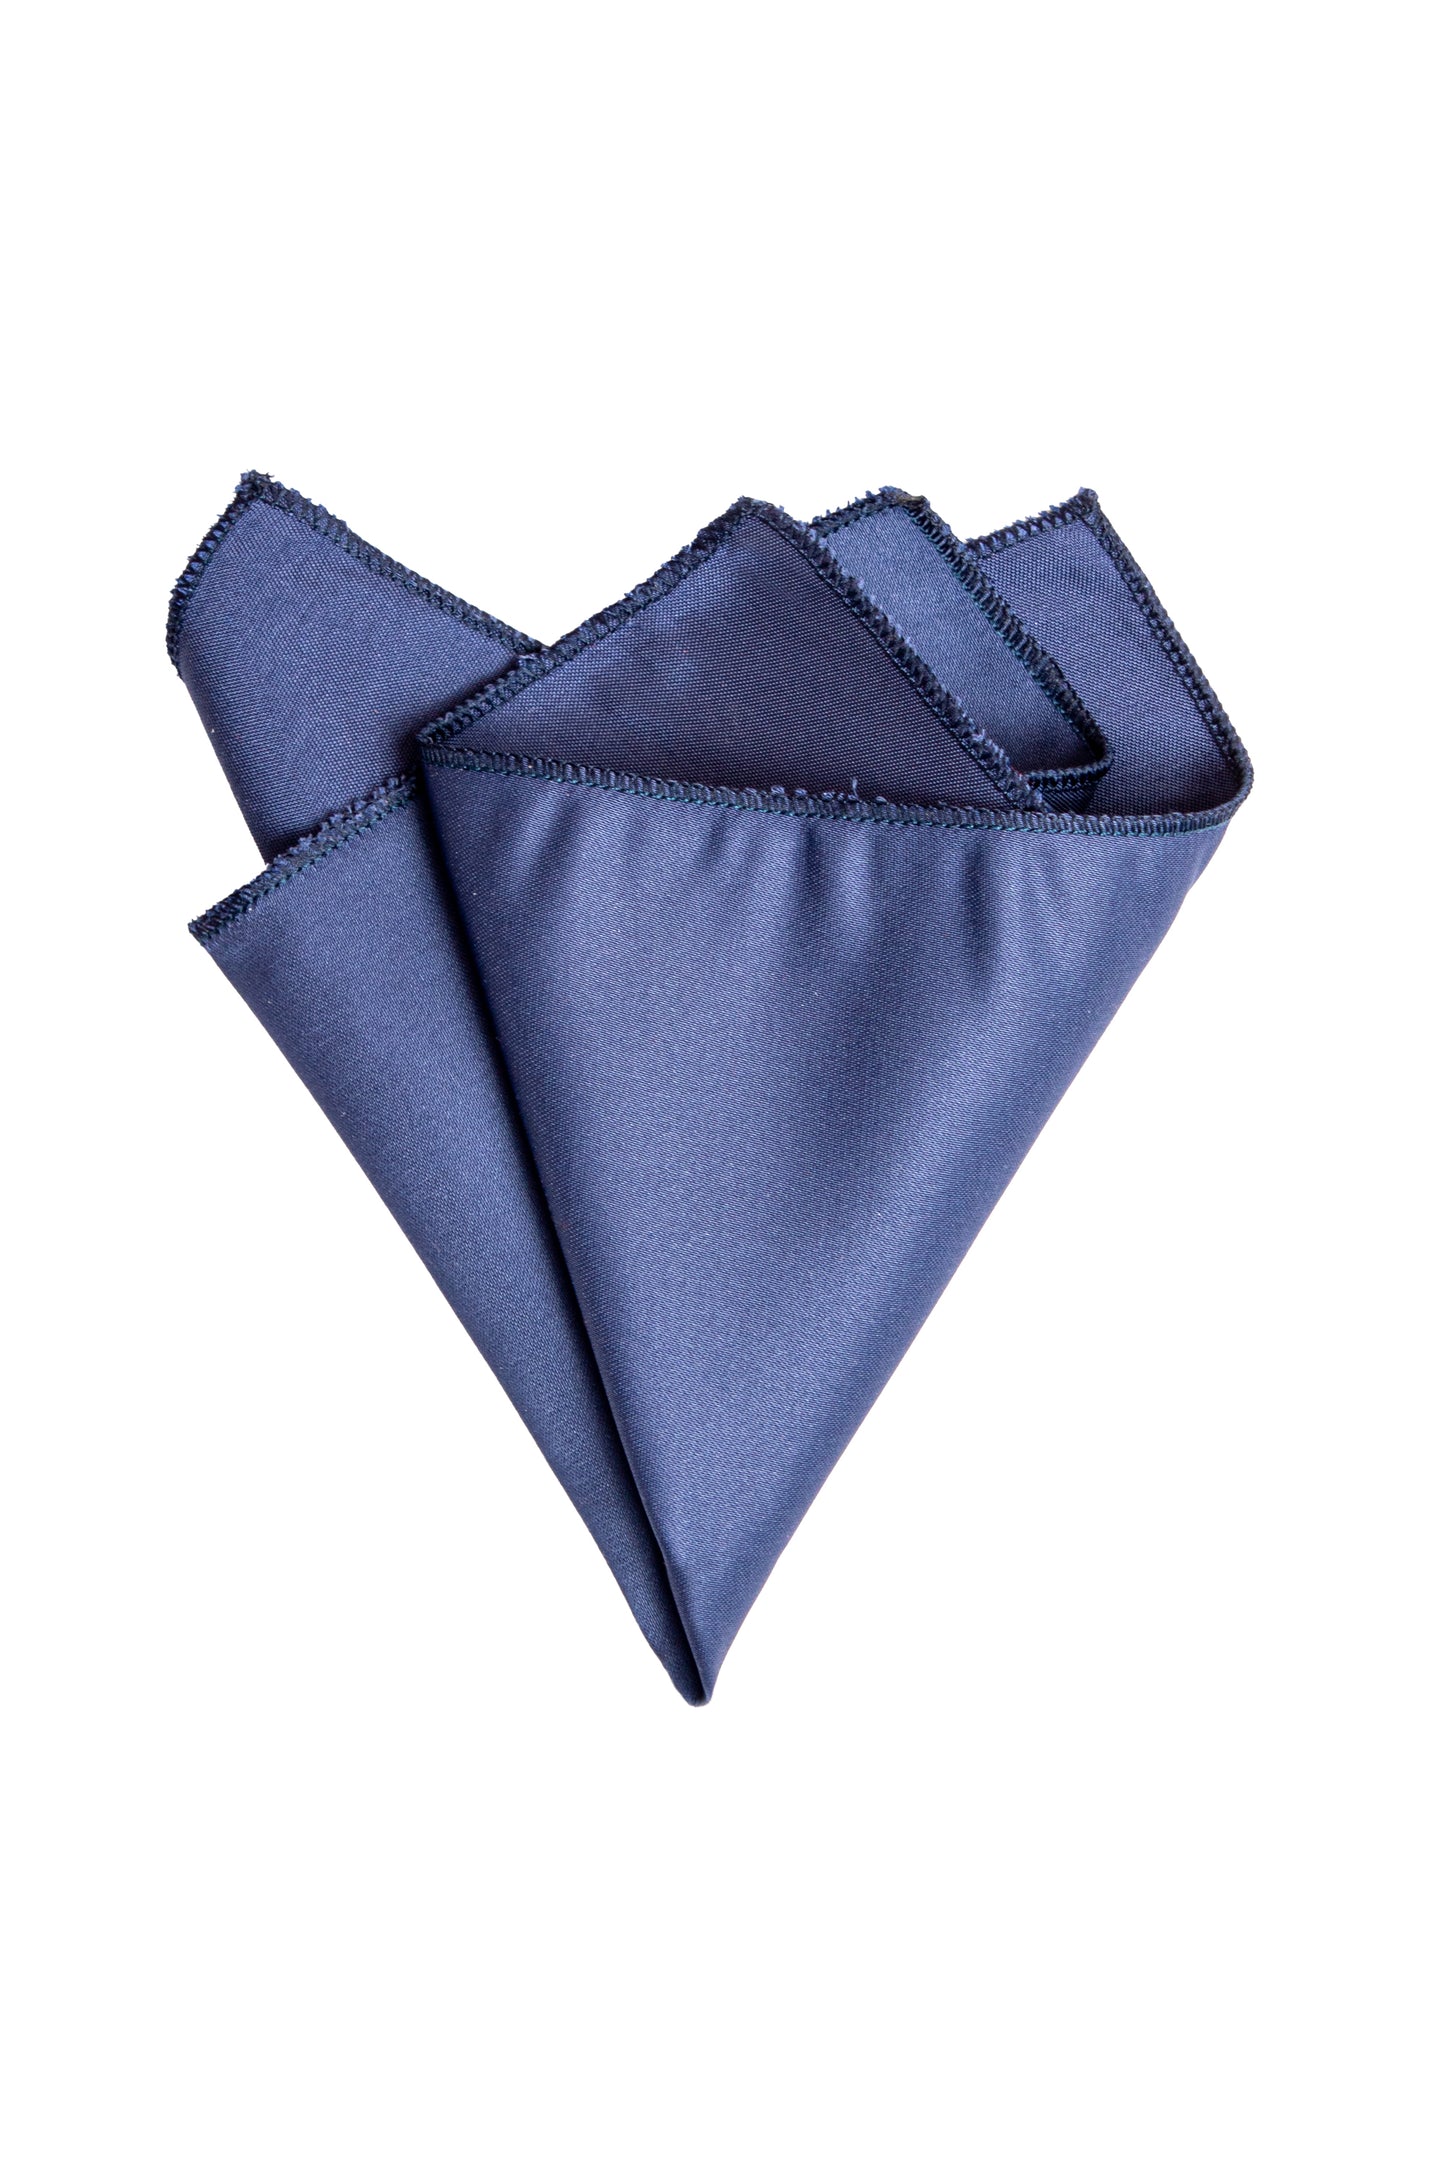 Dark blue pocket square